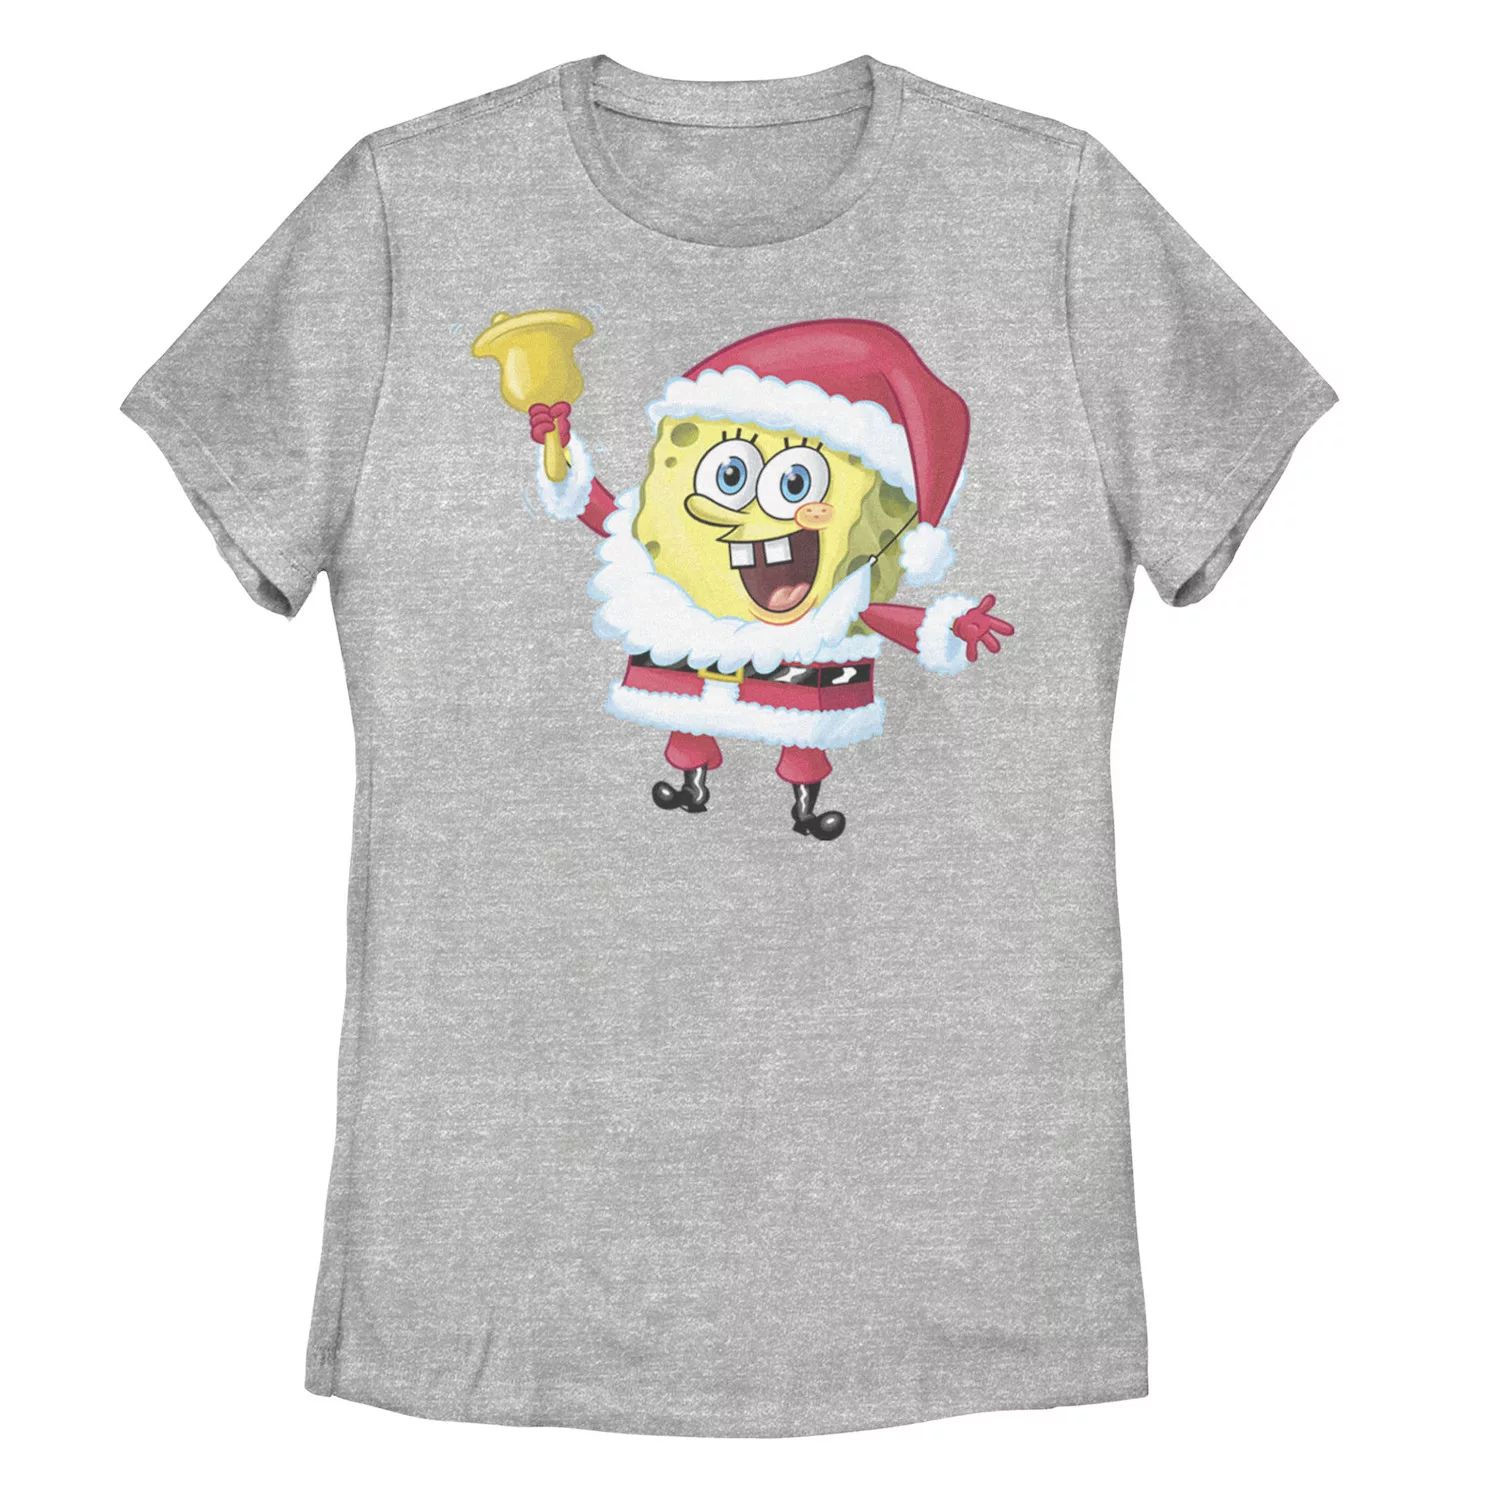 Детская футболка с рождественским рисунком «Губка Боб Квадратные Штаны» Санта-Клауса Licensed Character